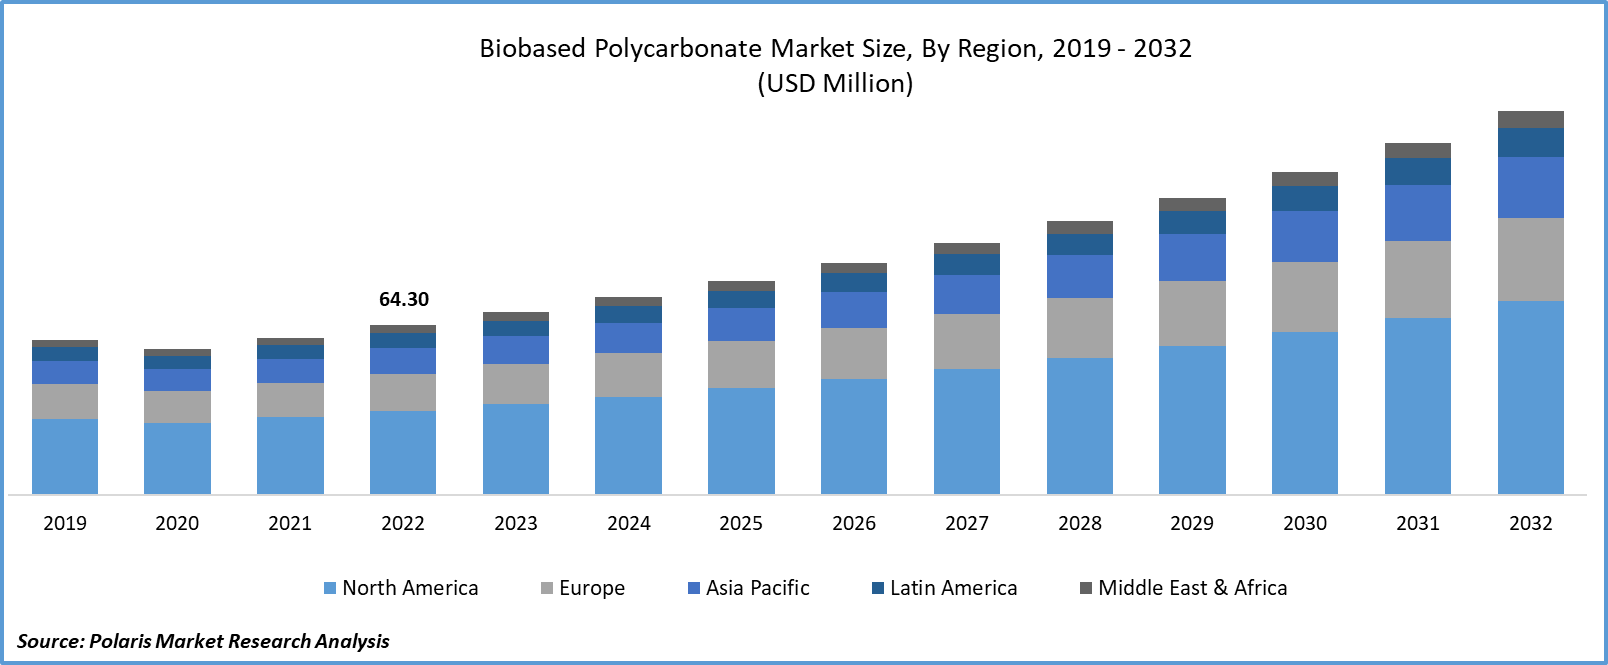 Biobased Polycarbonate Market Size